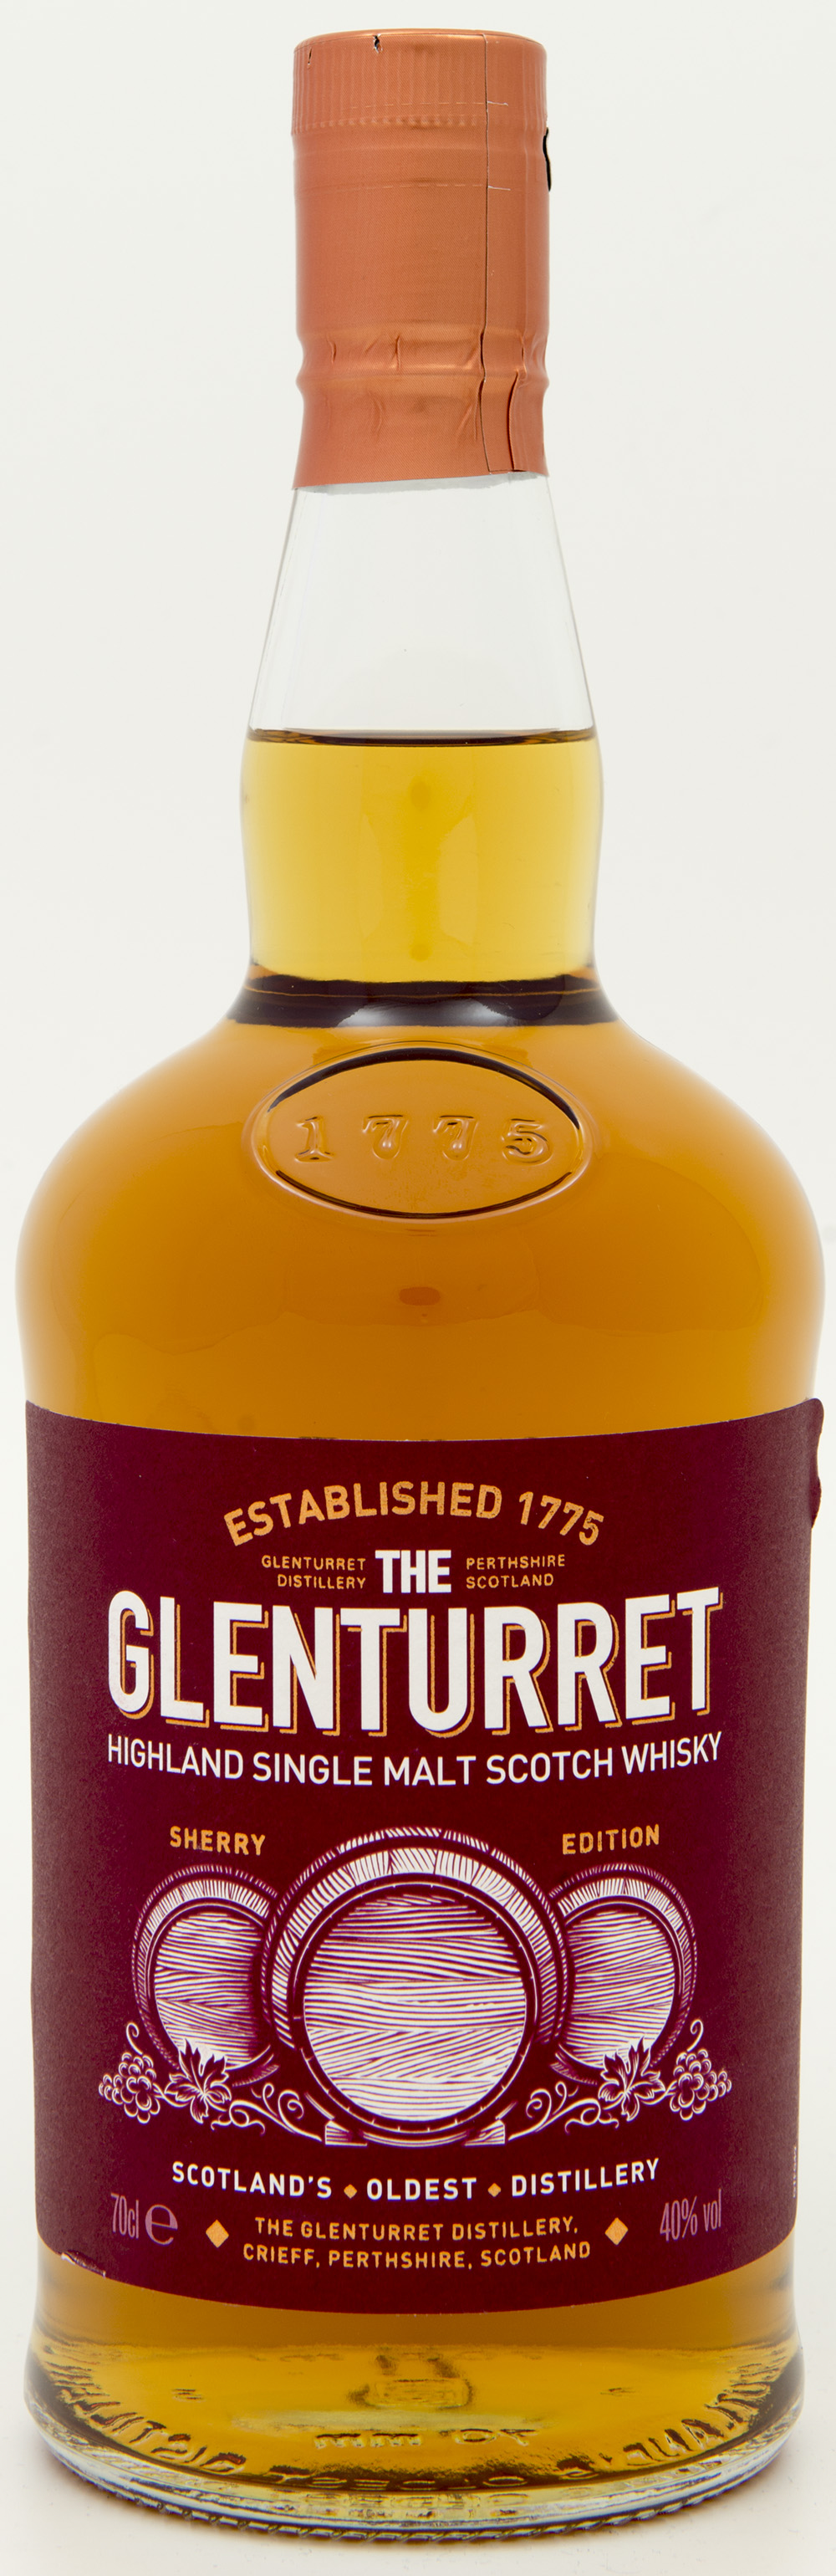 Billede: DSC_8181 - The Glenturret Sherry Edition - bottle front.jpg